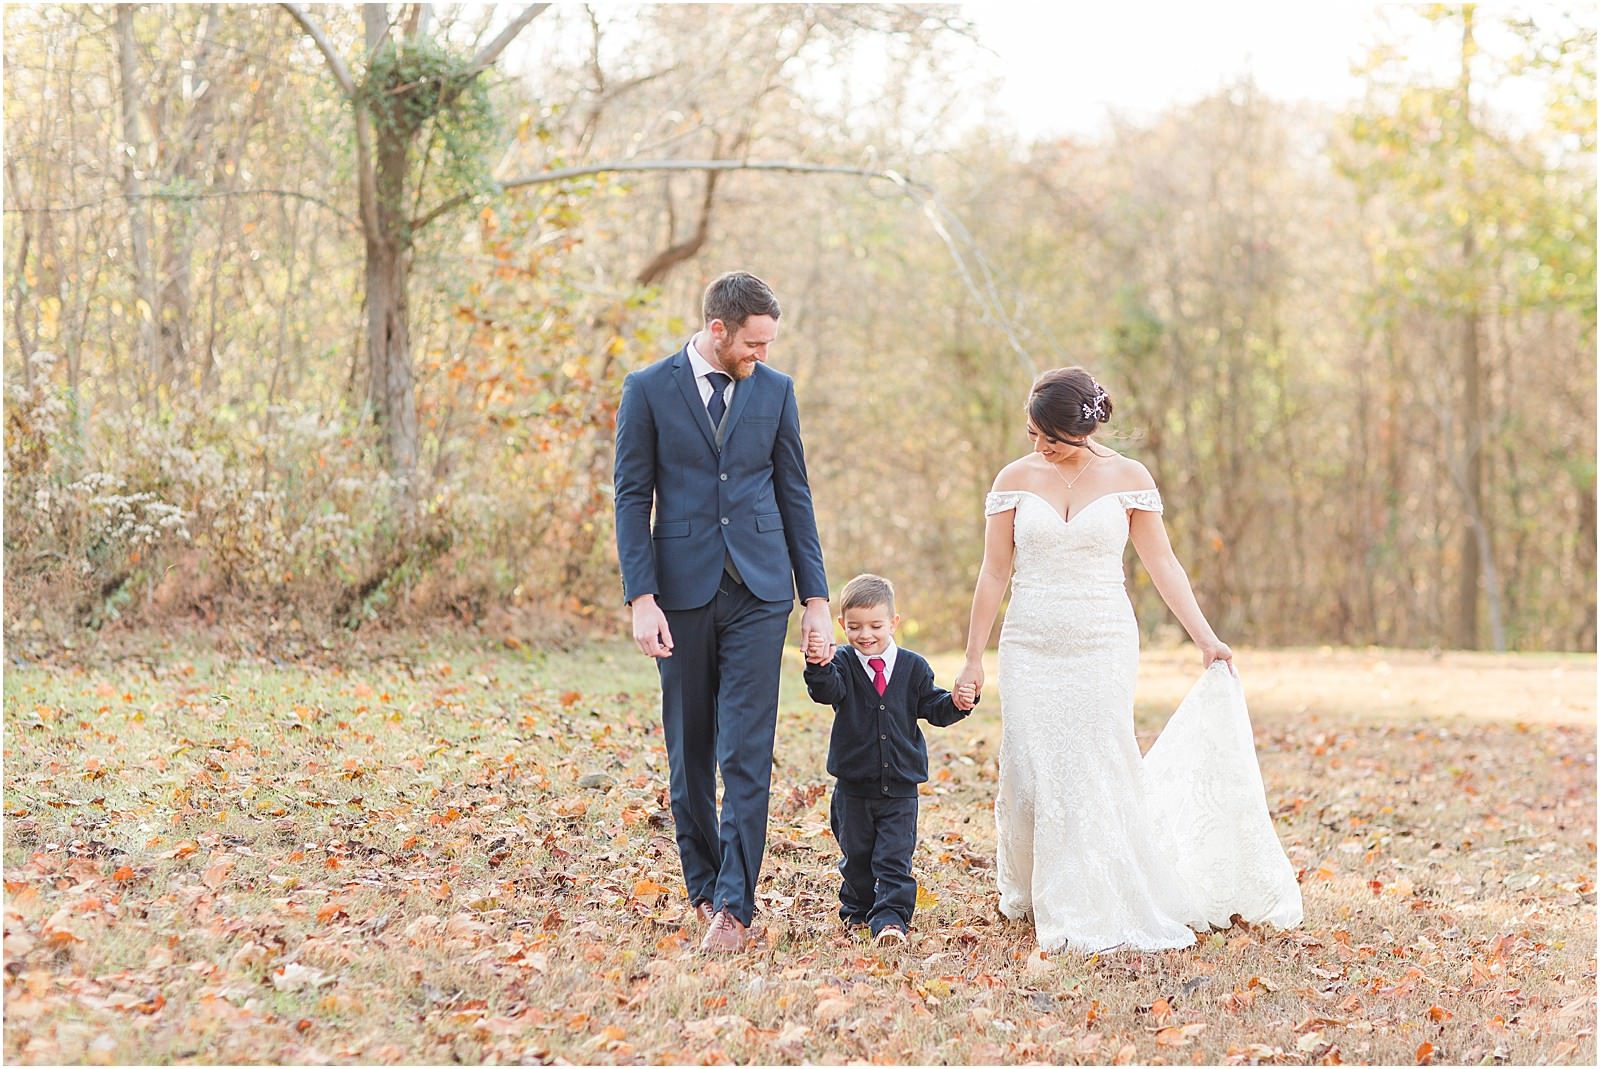 Walker and Alyssa's intimate fall wedding in Southern Indiana. | Wedding Photography | The Corner House Wedding | Southern Indiana Wedding | #fallwedding #intimatewedding | 055.jpg